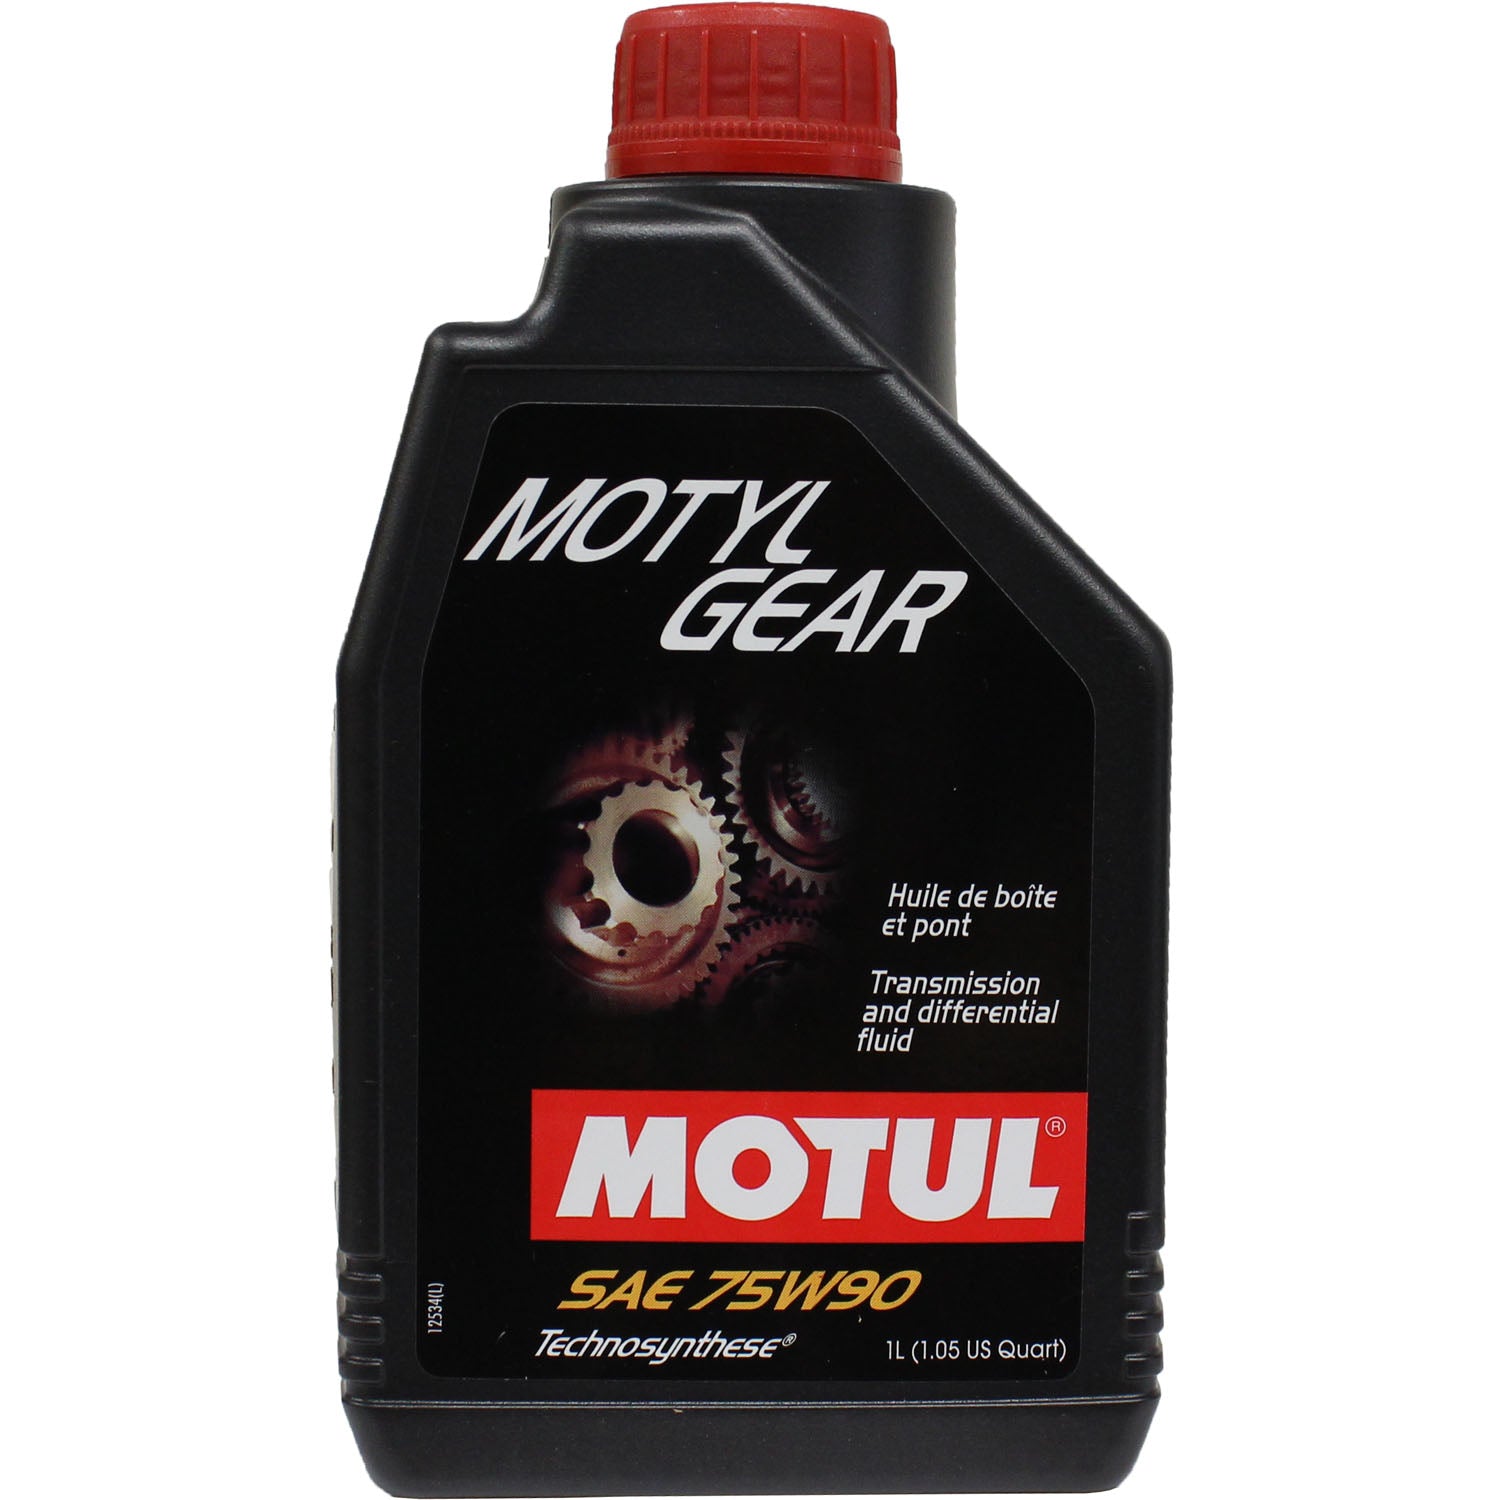 Motul Motylgear Transmission and Differential Fluid 75W90 - 1 Liter